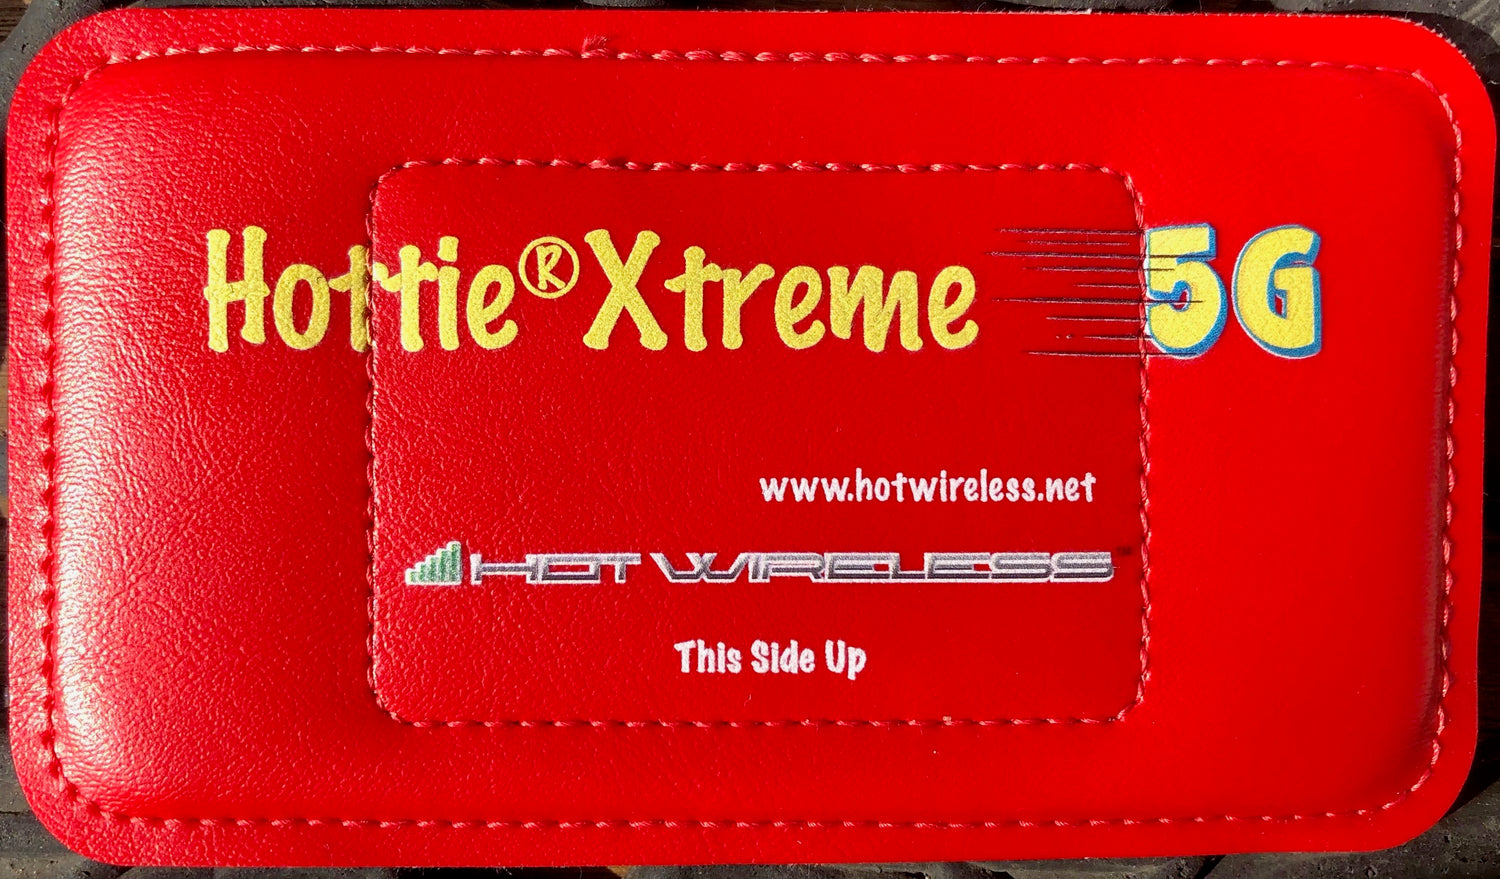 Hottie®Xtreme 5G Hot red